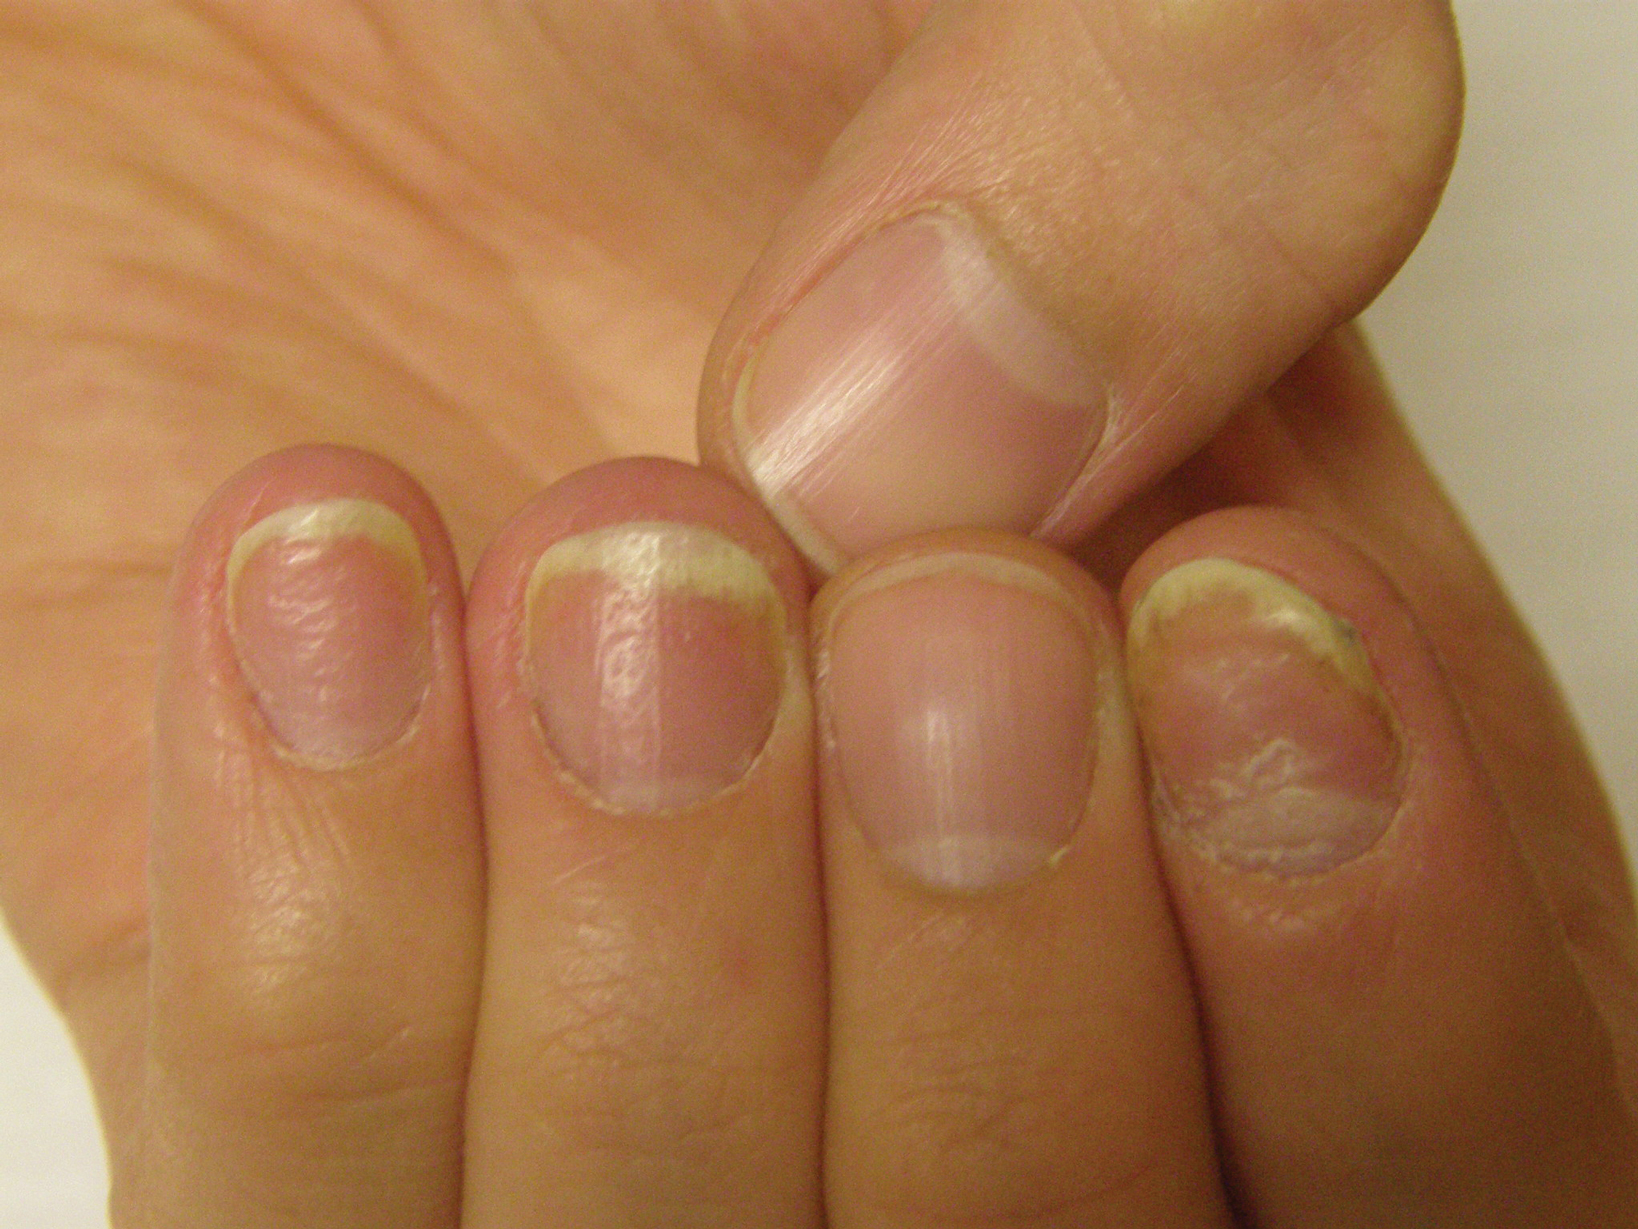 nail pitting psoriasis